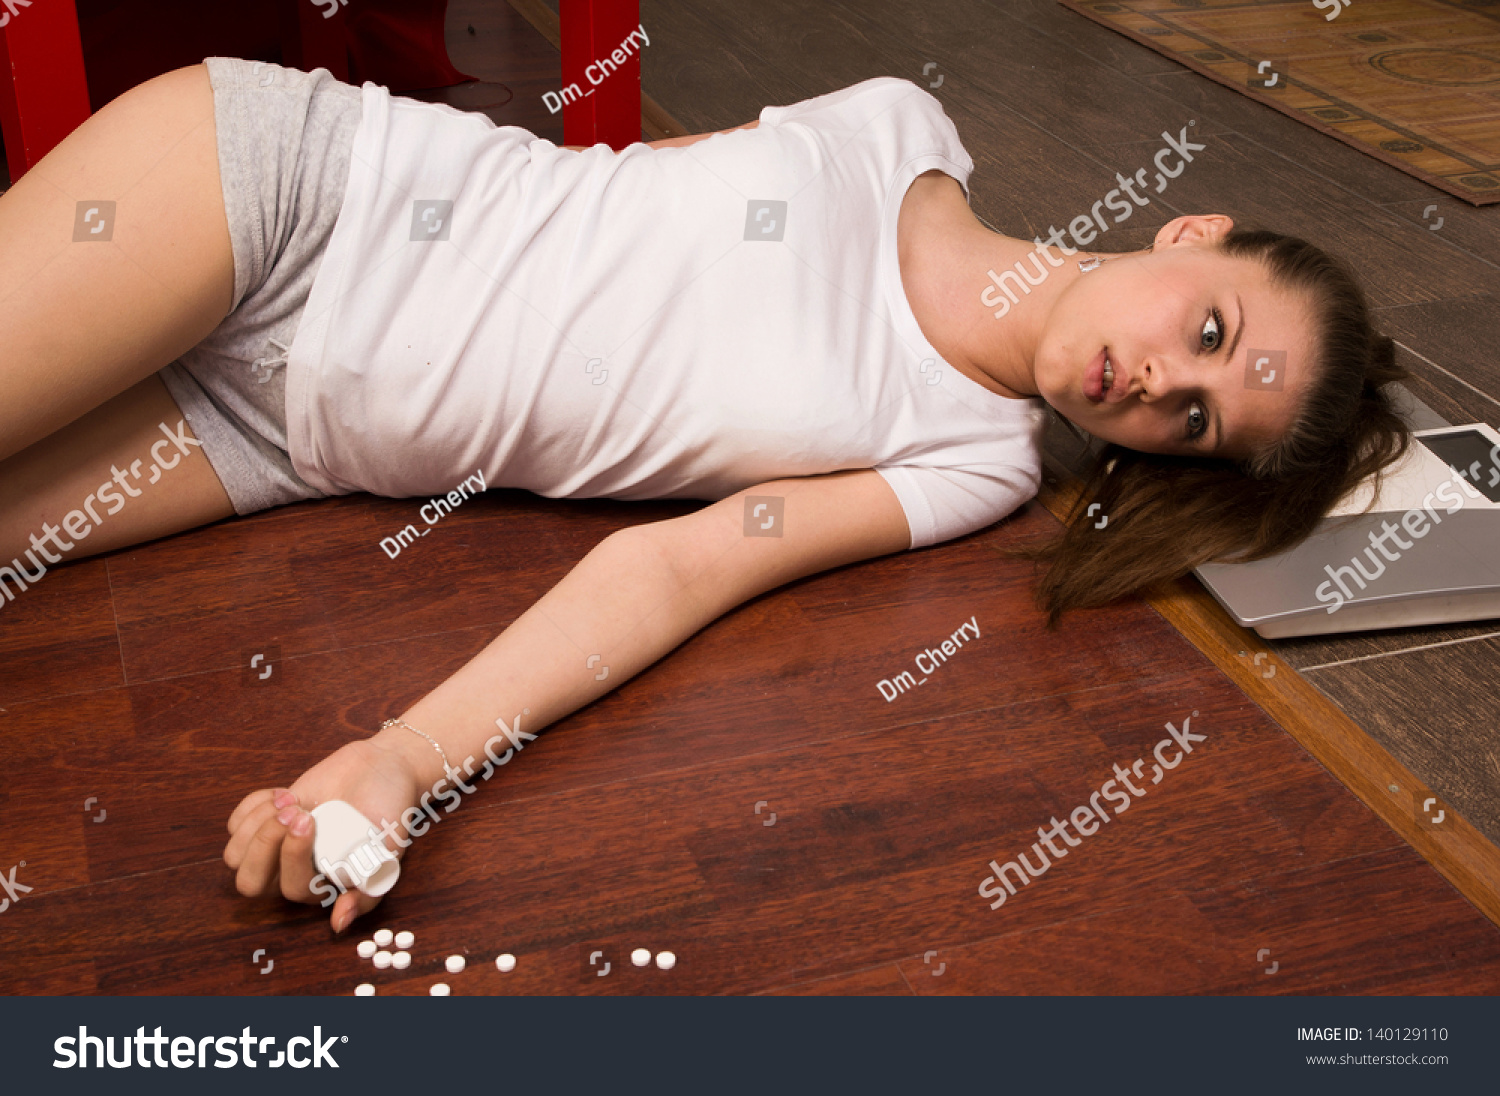 Crime Scene Simulation Overdosed Victim Lying Stockfoto 140129110 Shutterstock 2975